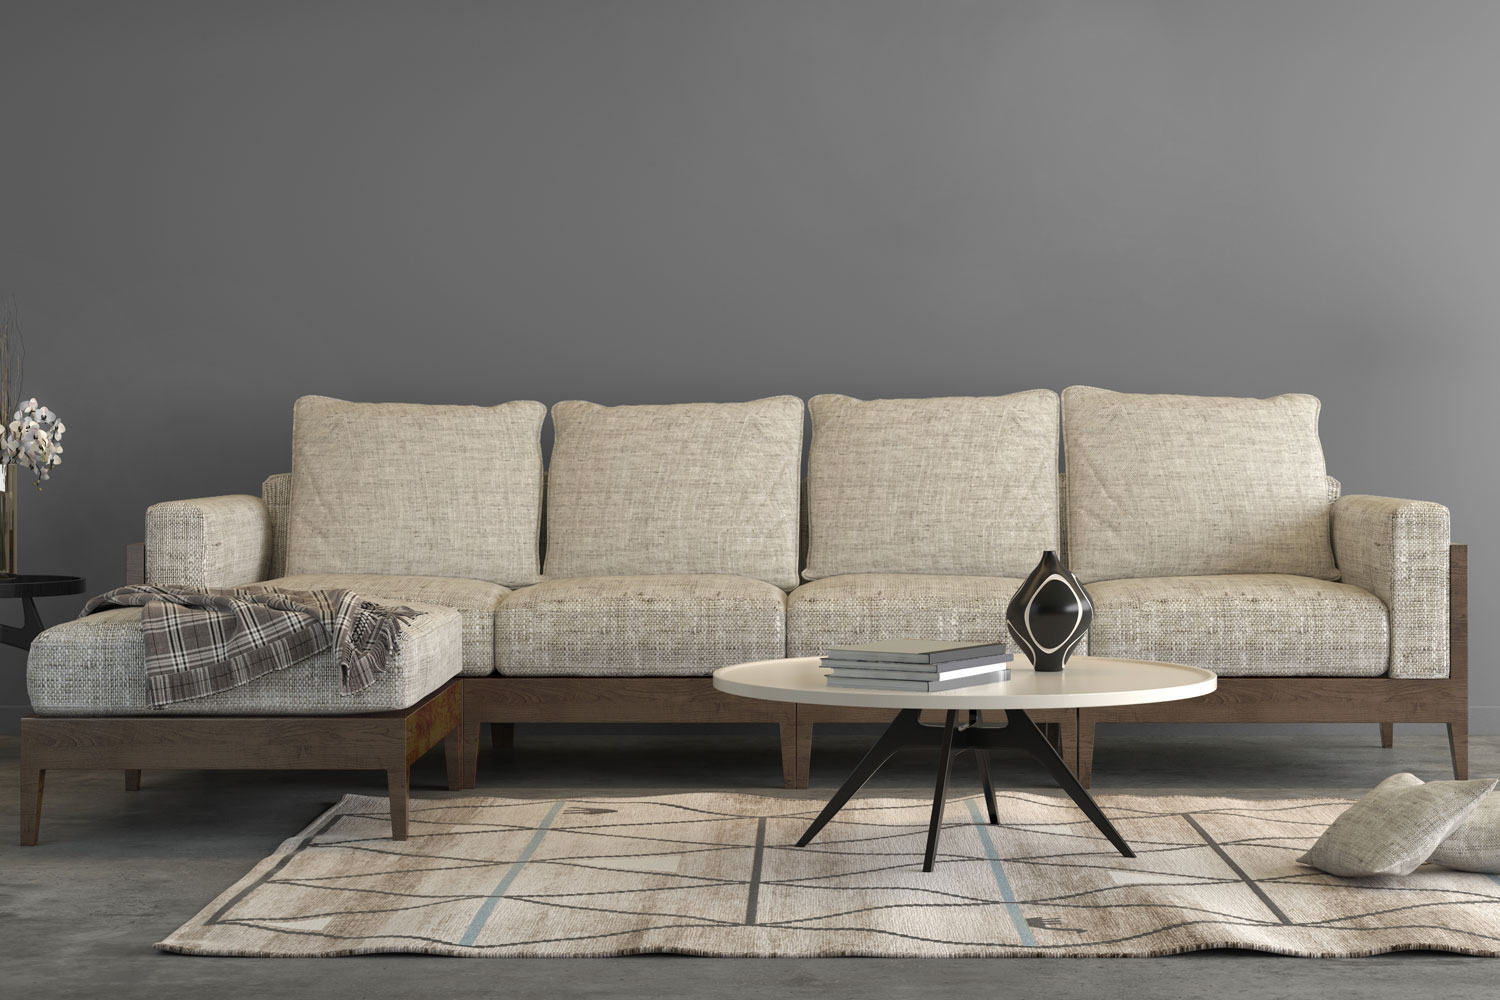 A beige foam sofa on a wooden oak sofa inside a gray painted living room